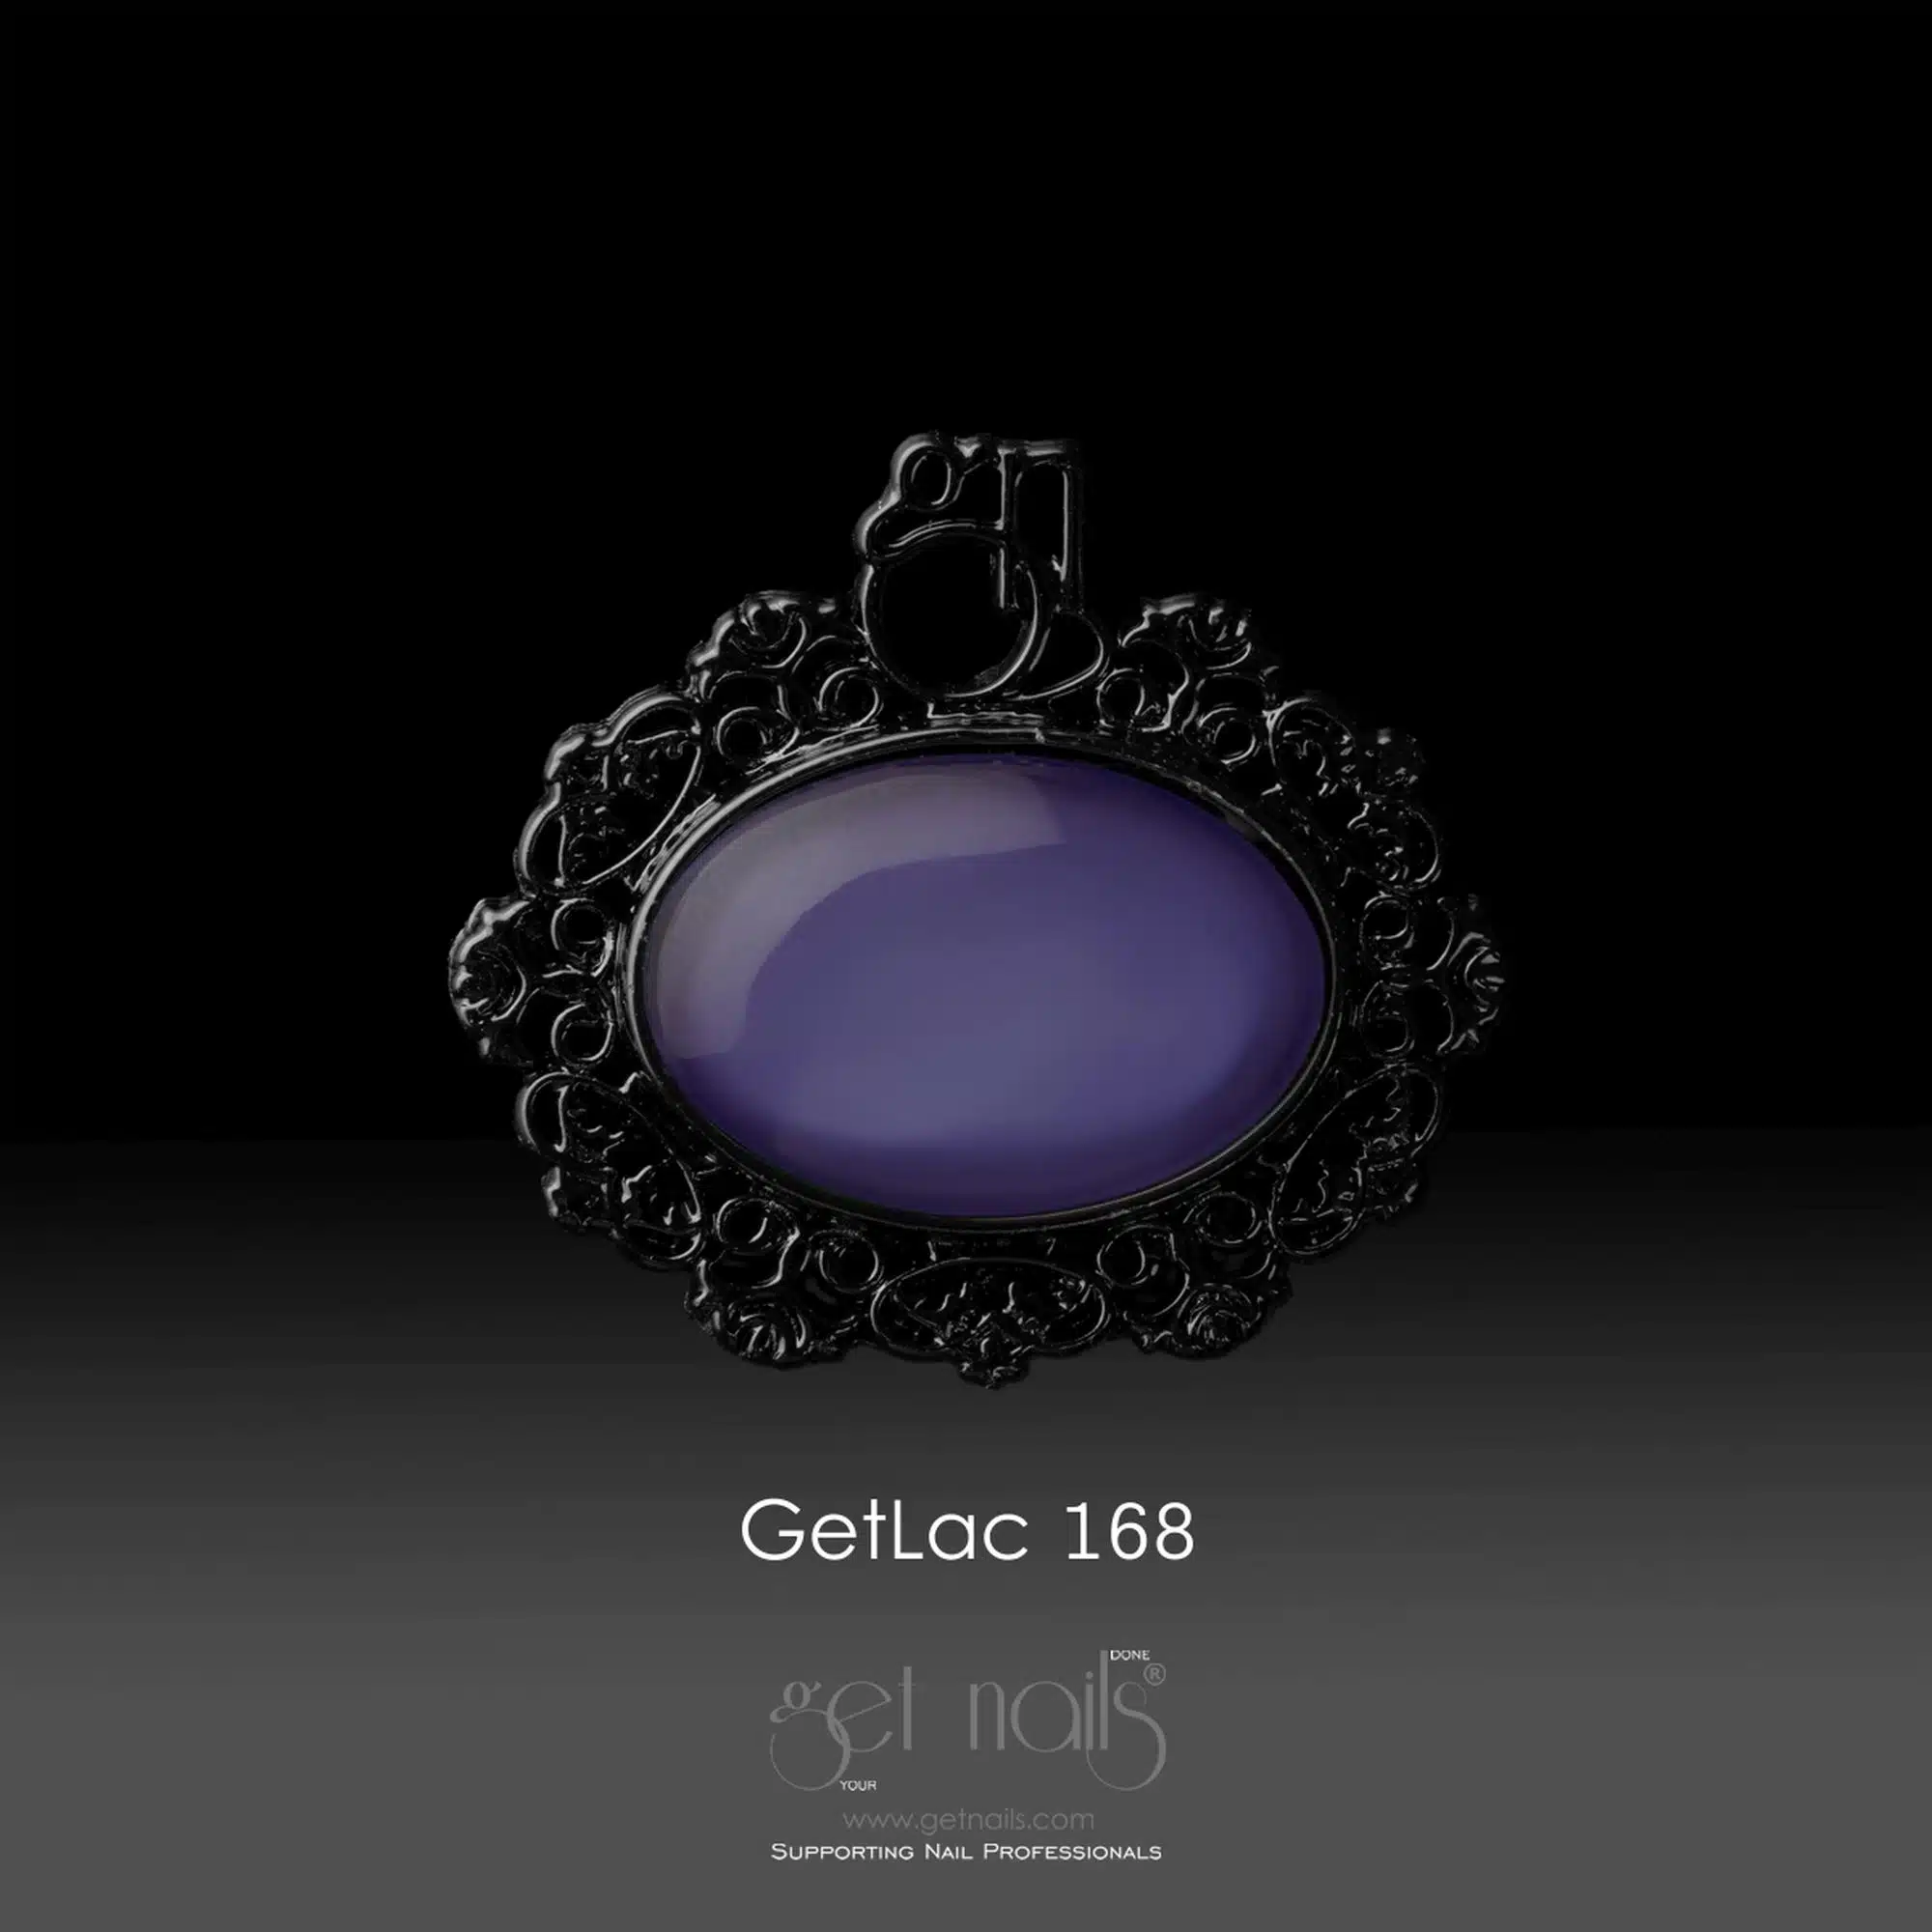 Get Nails Austria - GetLac 168 15 g